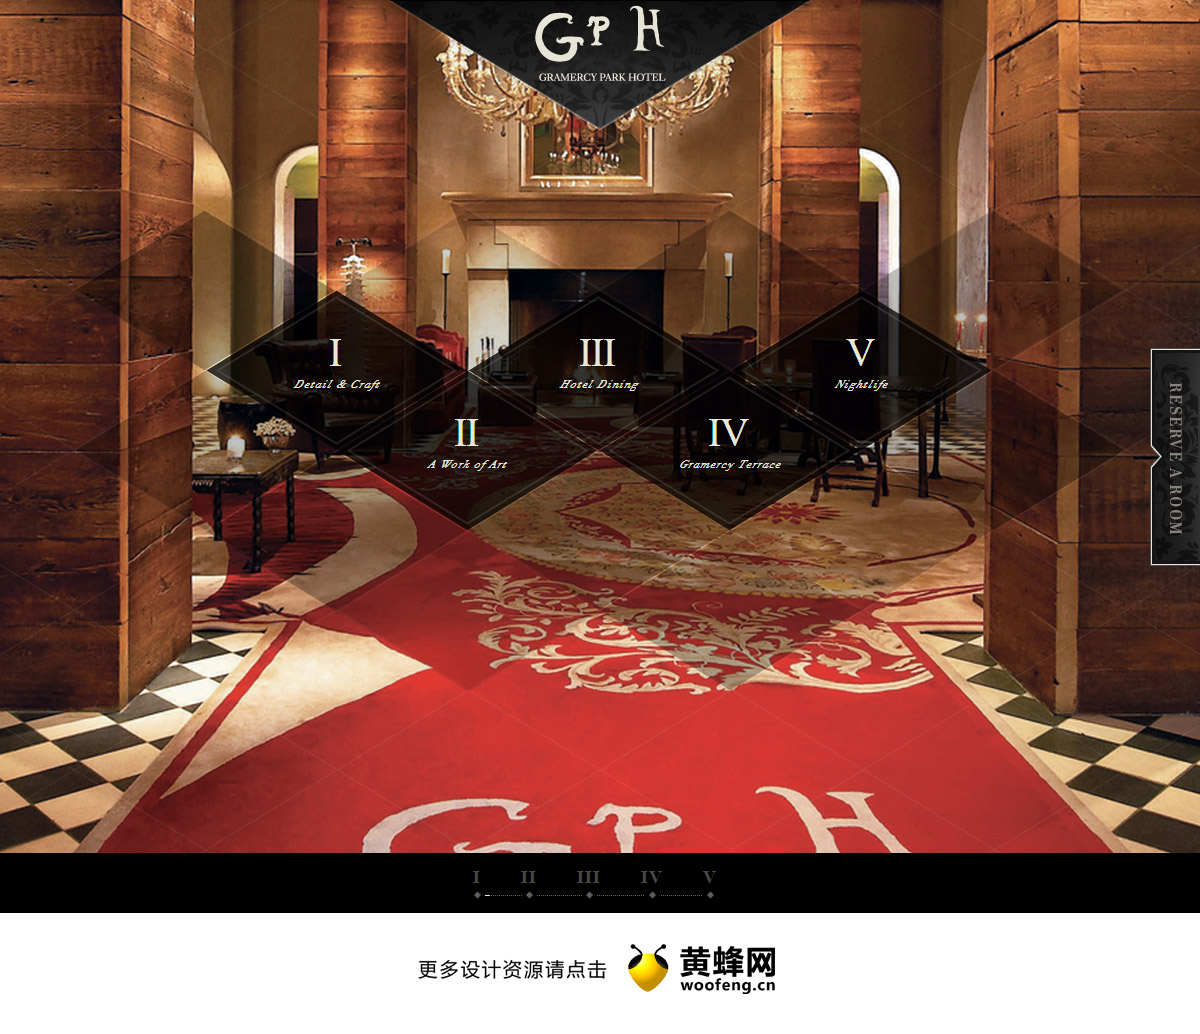 Gramercy Park Hotel酒店官方网站，来源自黄蜂网https://woofeng.cn/web/